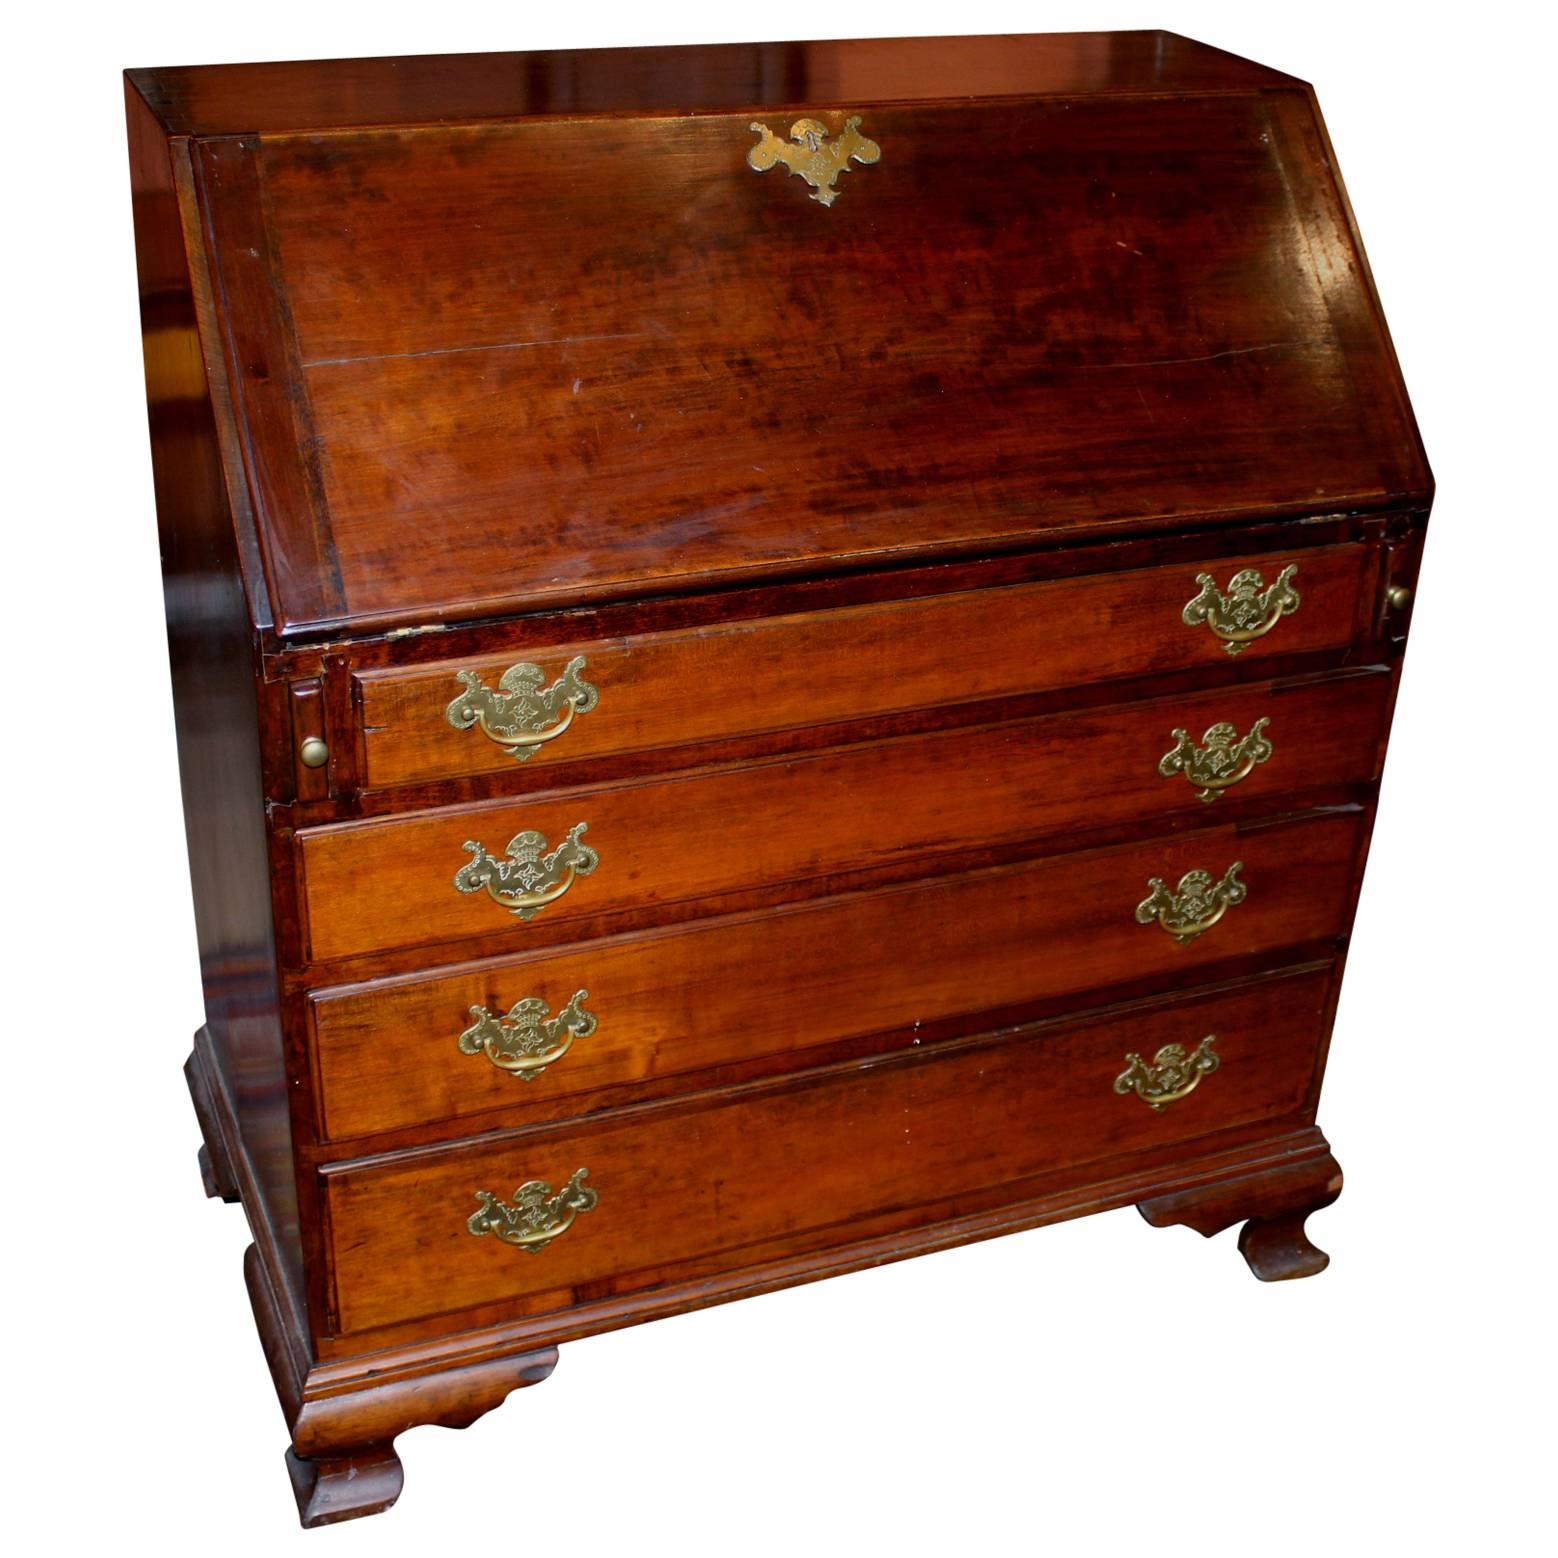 18th Century Chippendale Slant Front Desk with Secret Compartments